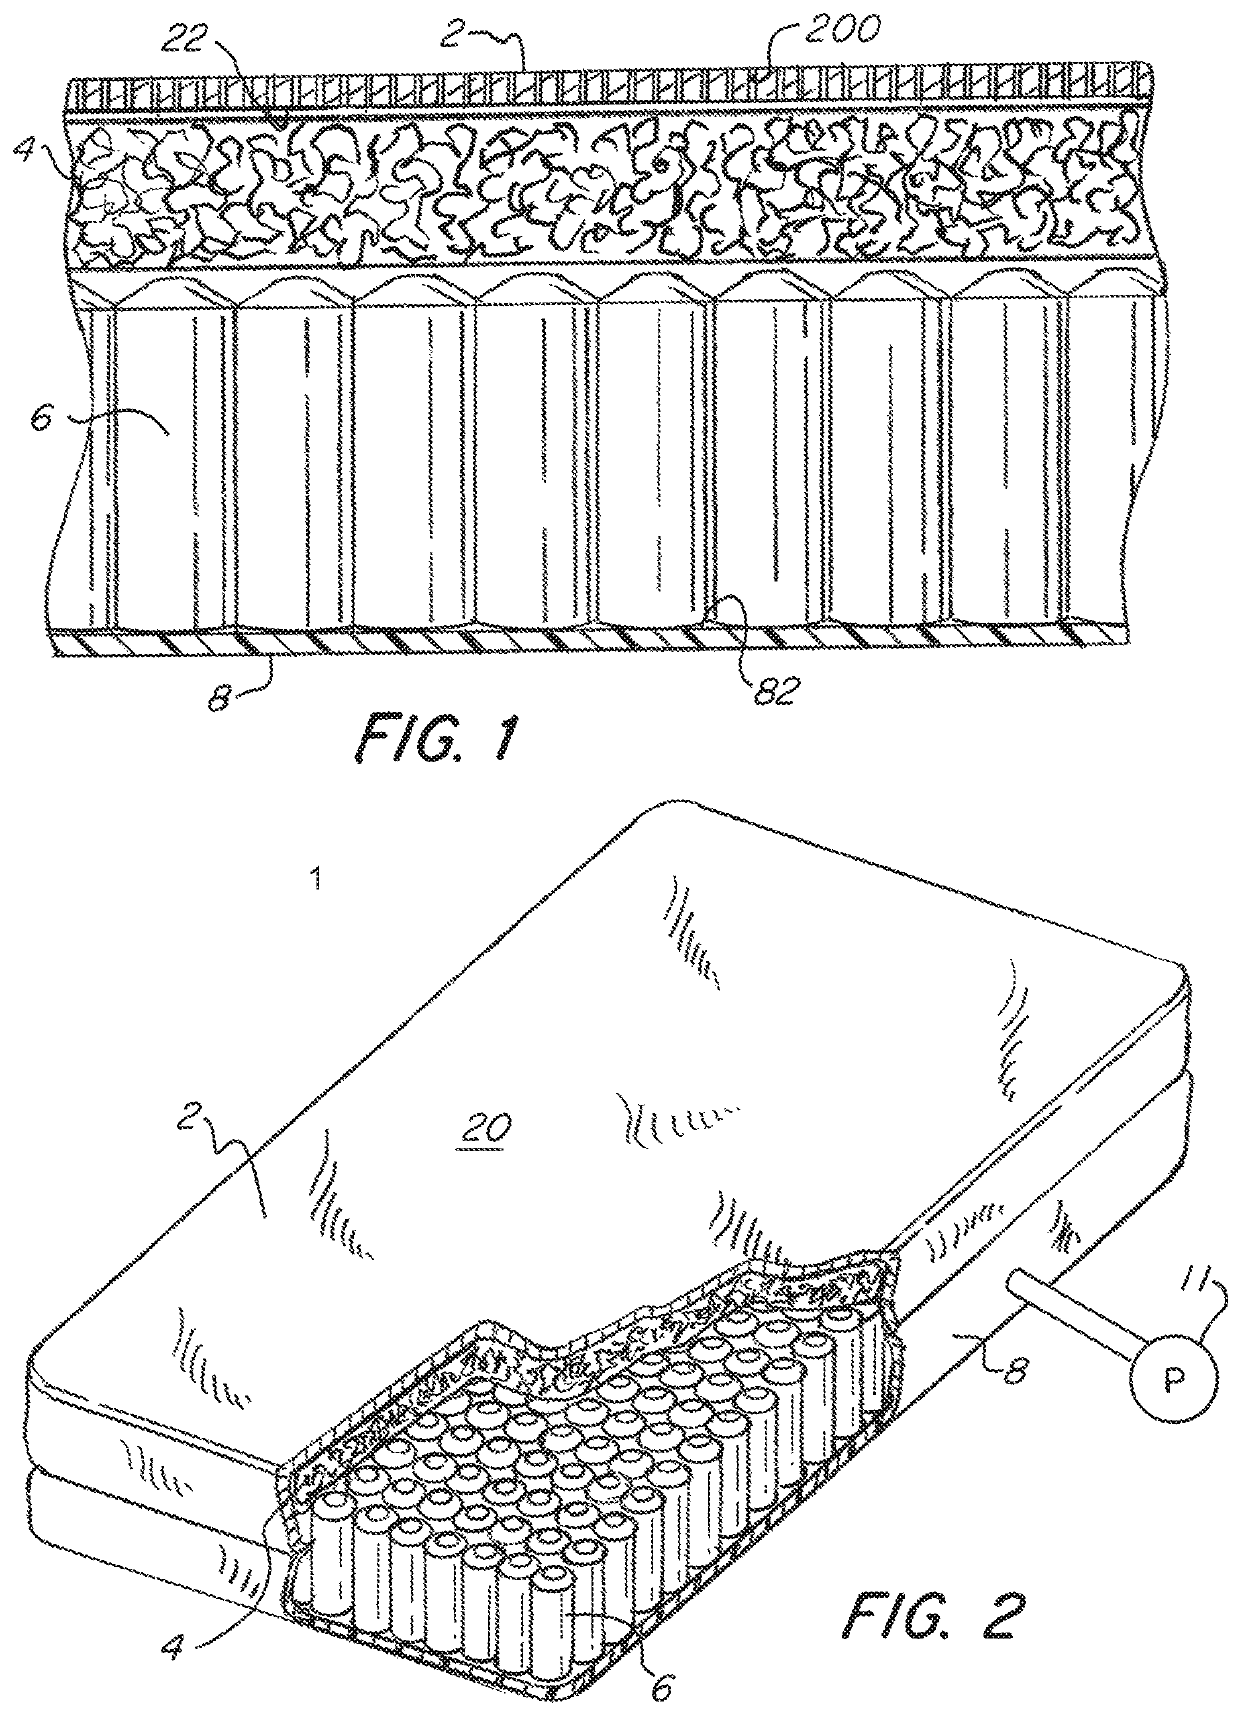 Bleach compatible polyolefin mattress cover